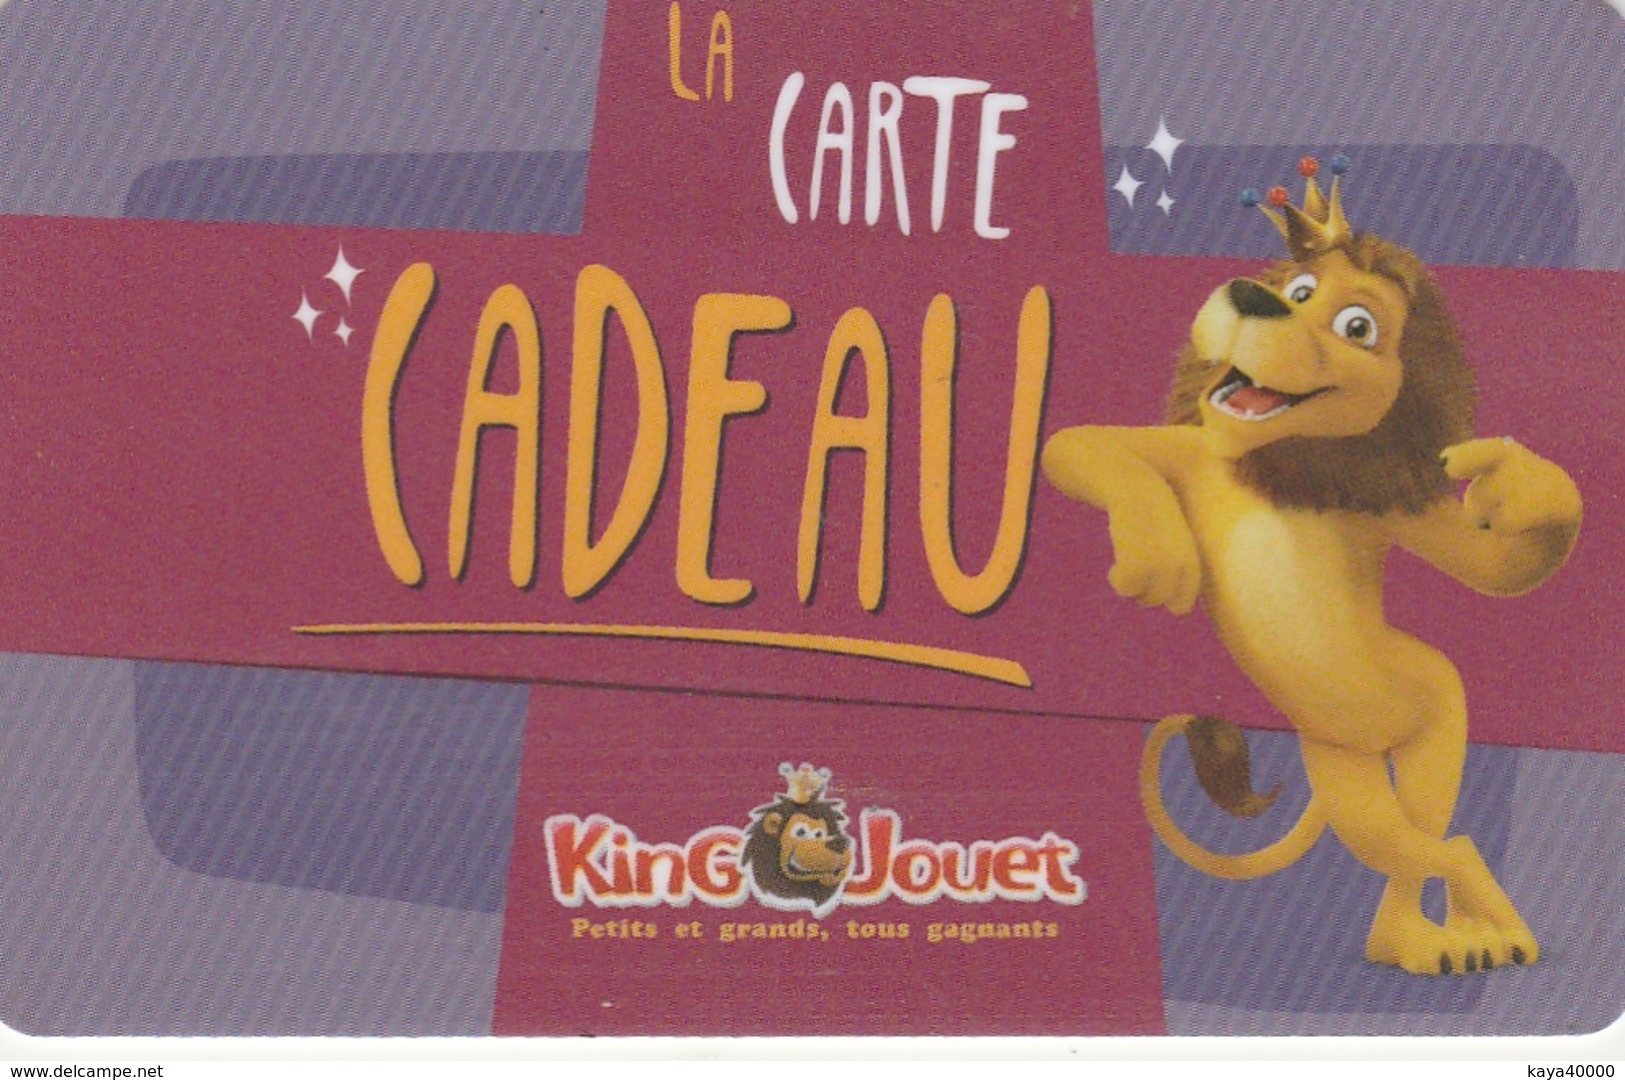 ## Carte  Cadeau  Princesse  KING JOUET ##  (France)   Gift Card, Giftcart, Carta Regalo, Cadeaukaart - Cartes Cadeaux